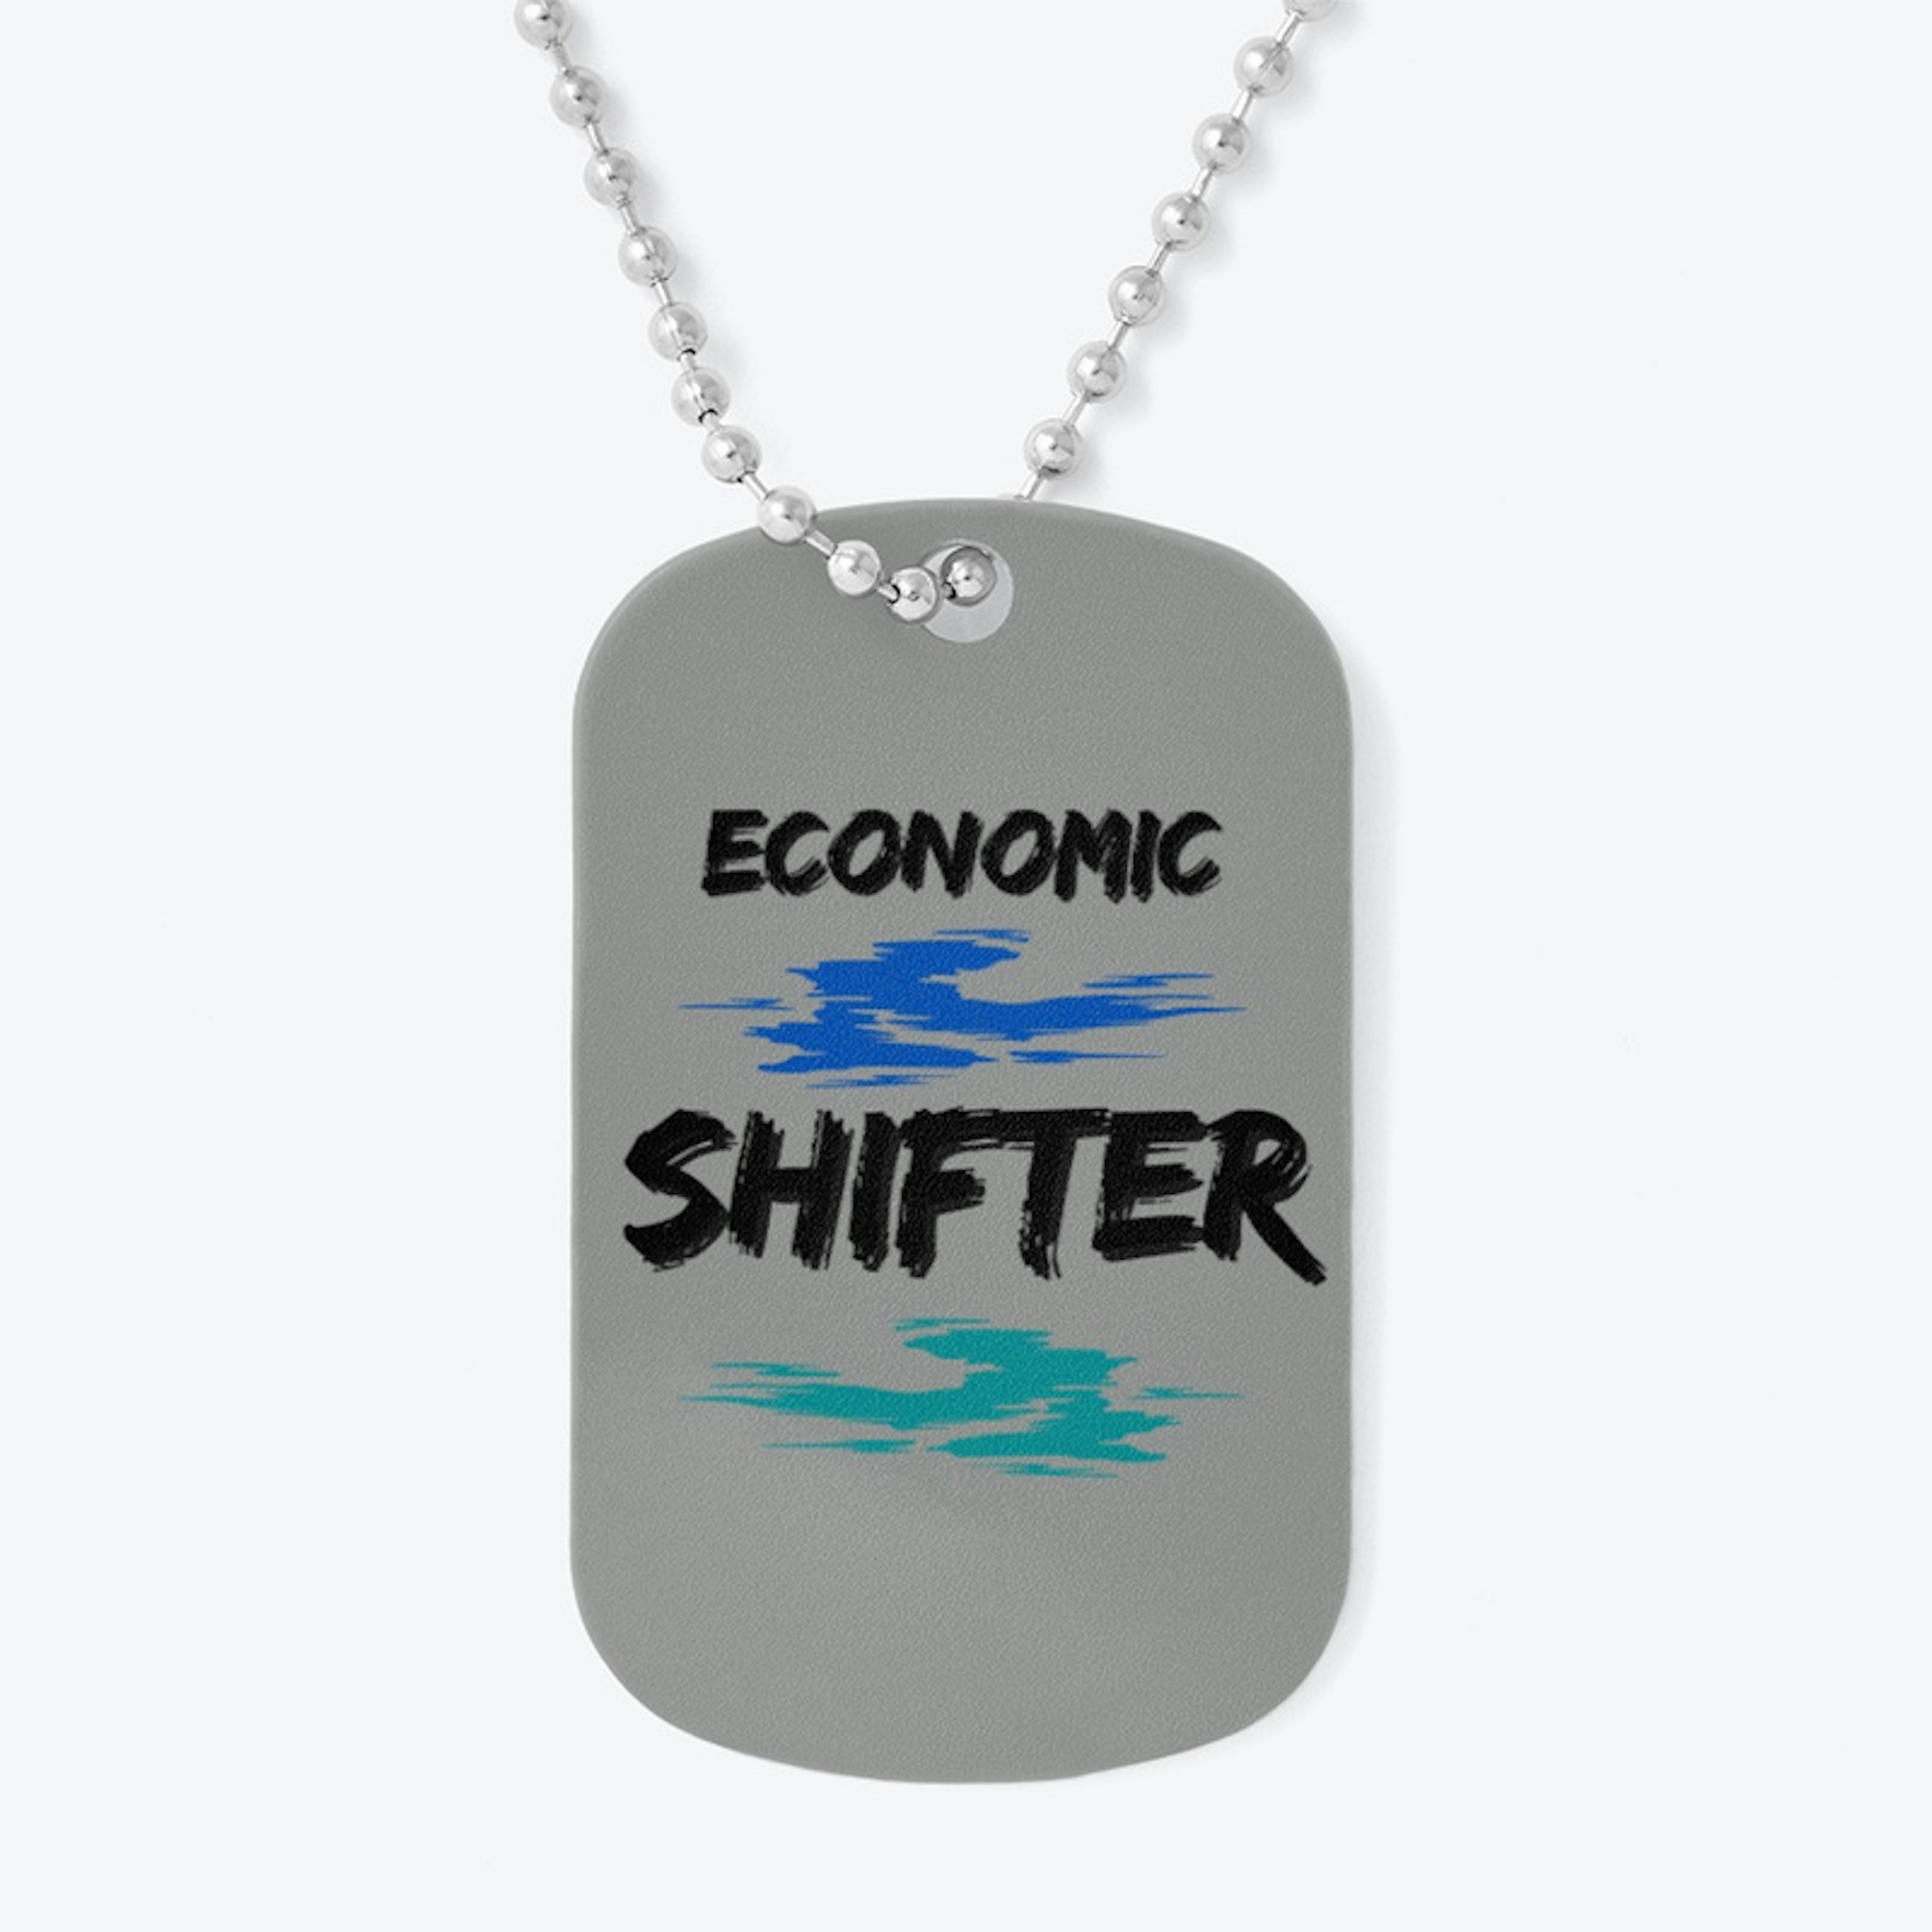 Economic Shifter